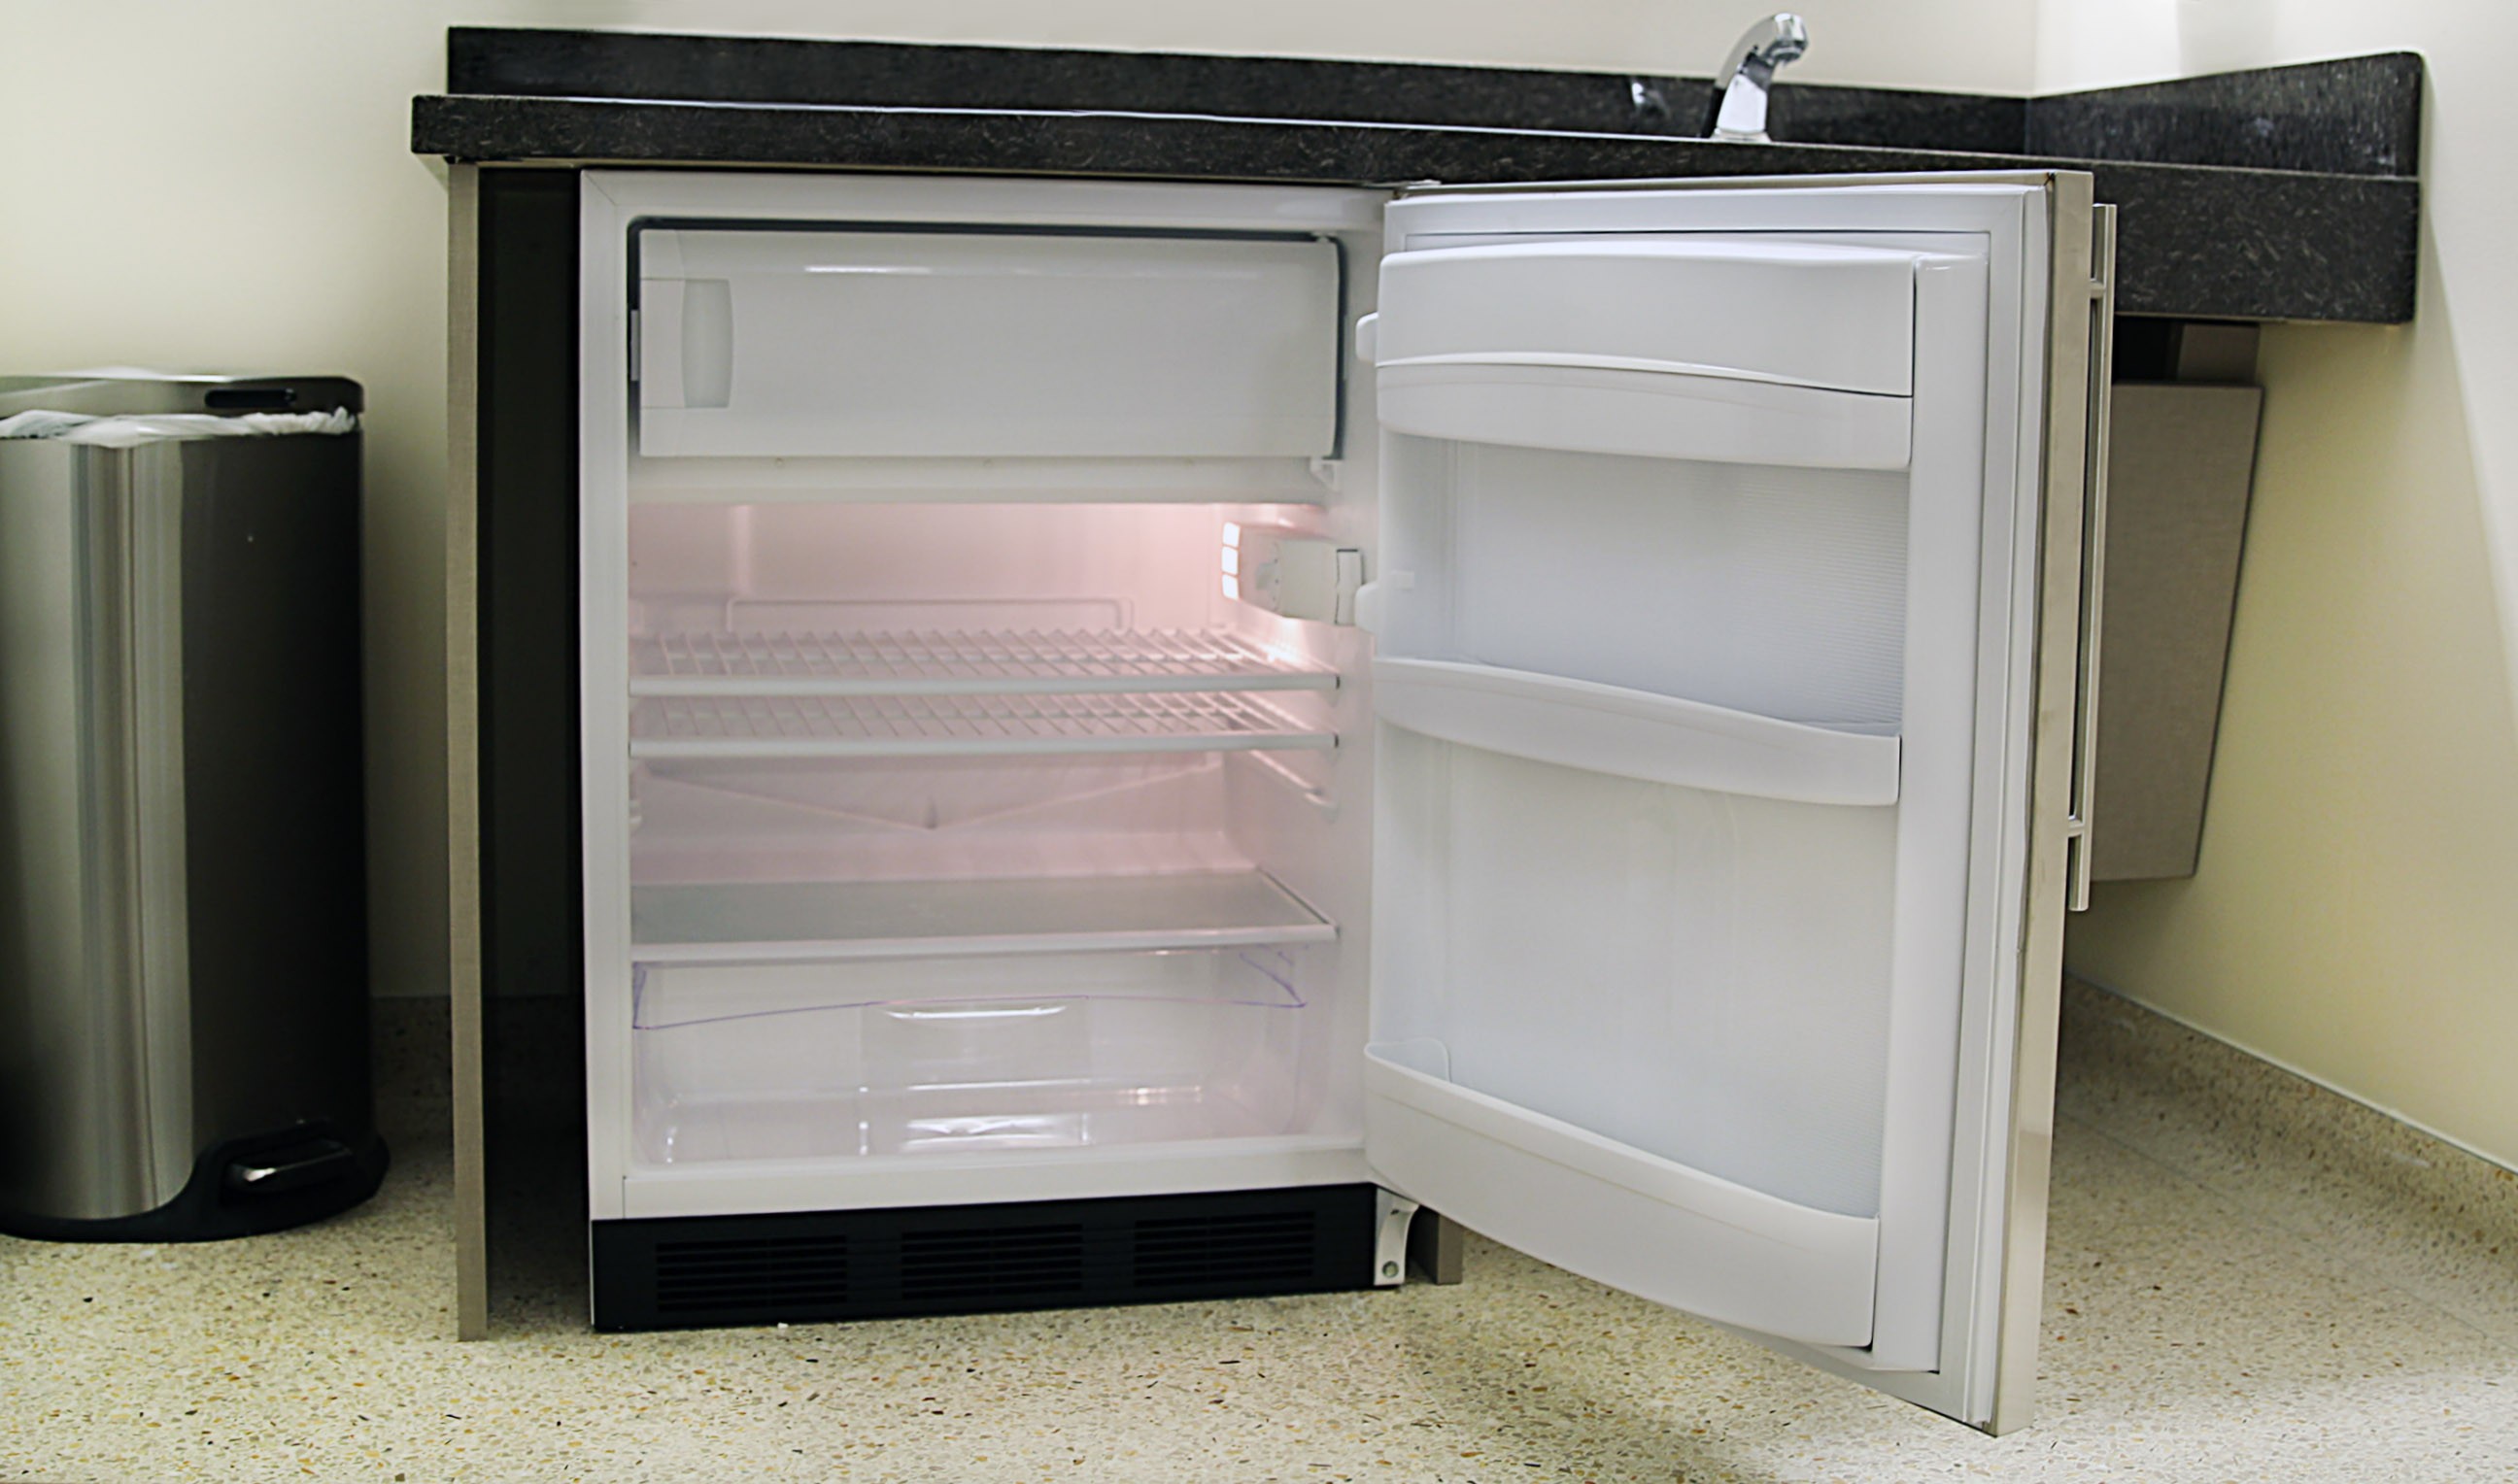 Refrigerator Detail